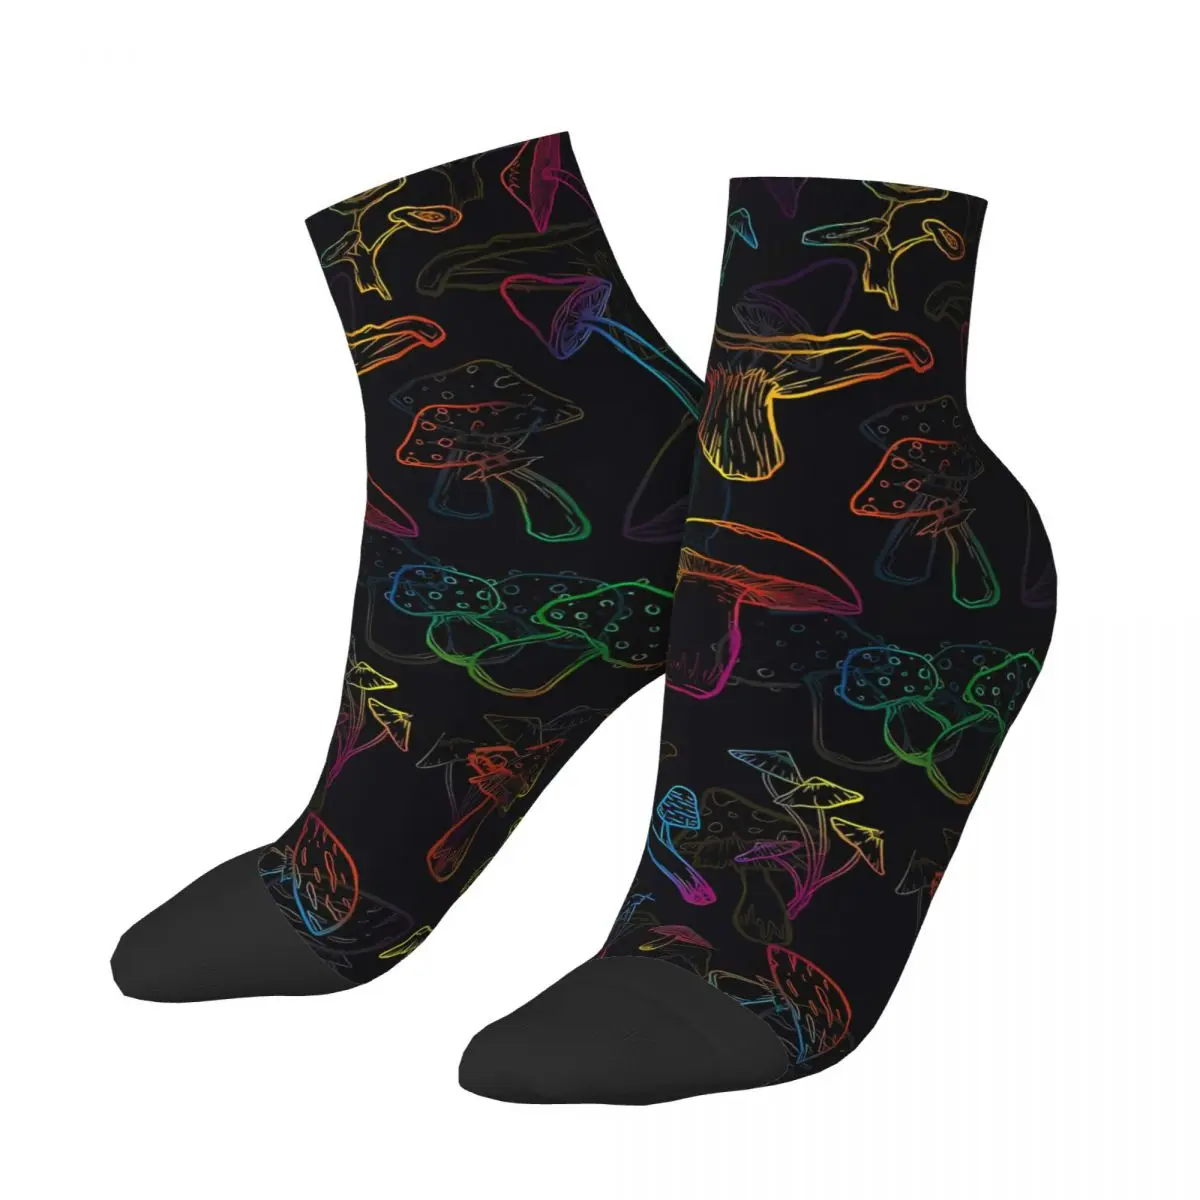 

Happy Men's Ankle Socks Good Trip Mushroom Hip Hop Crazy Crew Sock Gift Pattern Printed